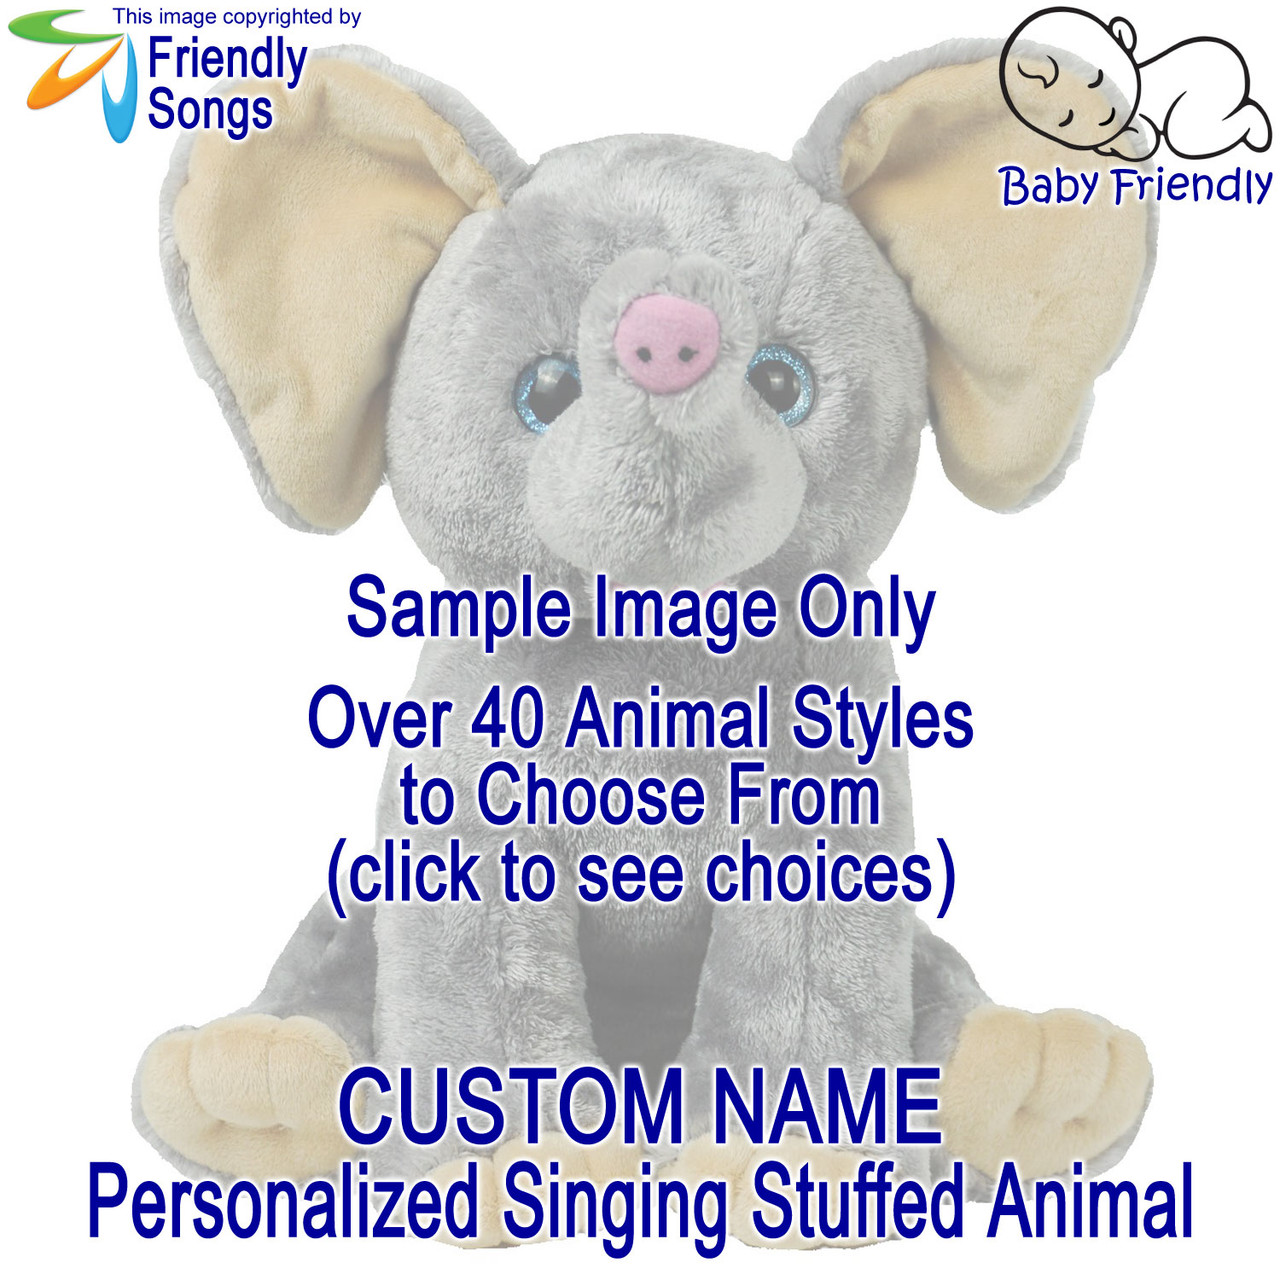 CUSTOM NAME - Personalized Singing Stuffed Animal Plush Toys - Kid Music  Personalized Music & Gifts